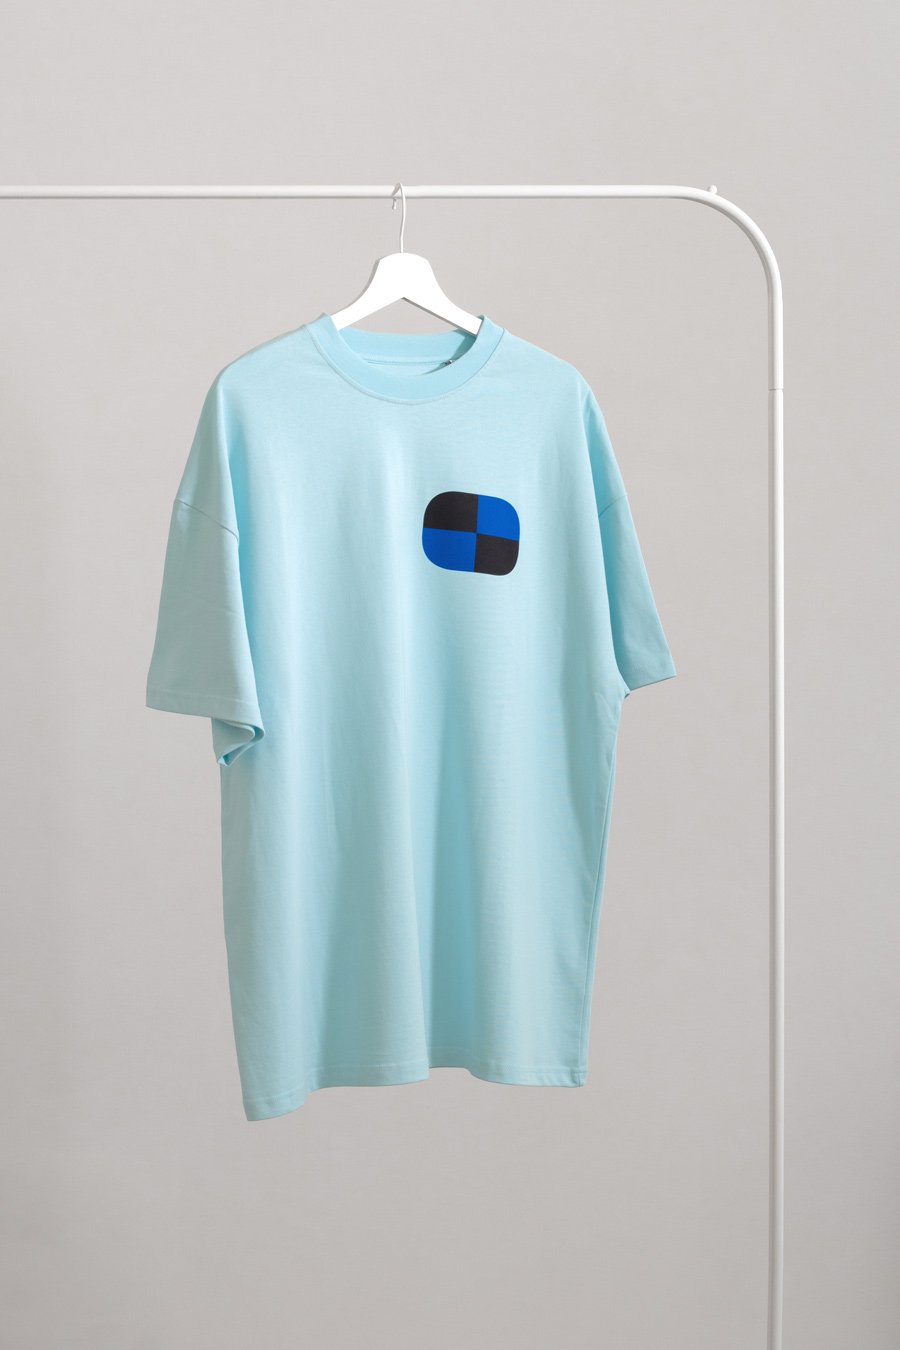 Oversized T-Shirt “Target” (Mint) 3